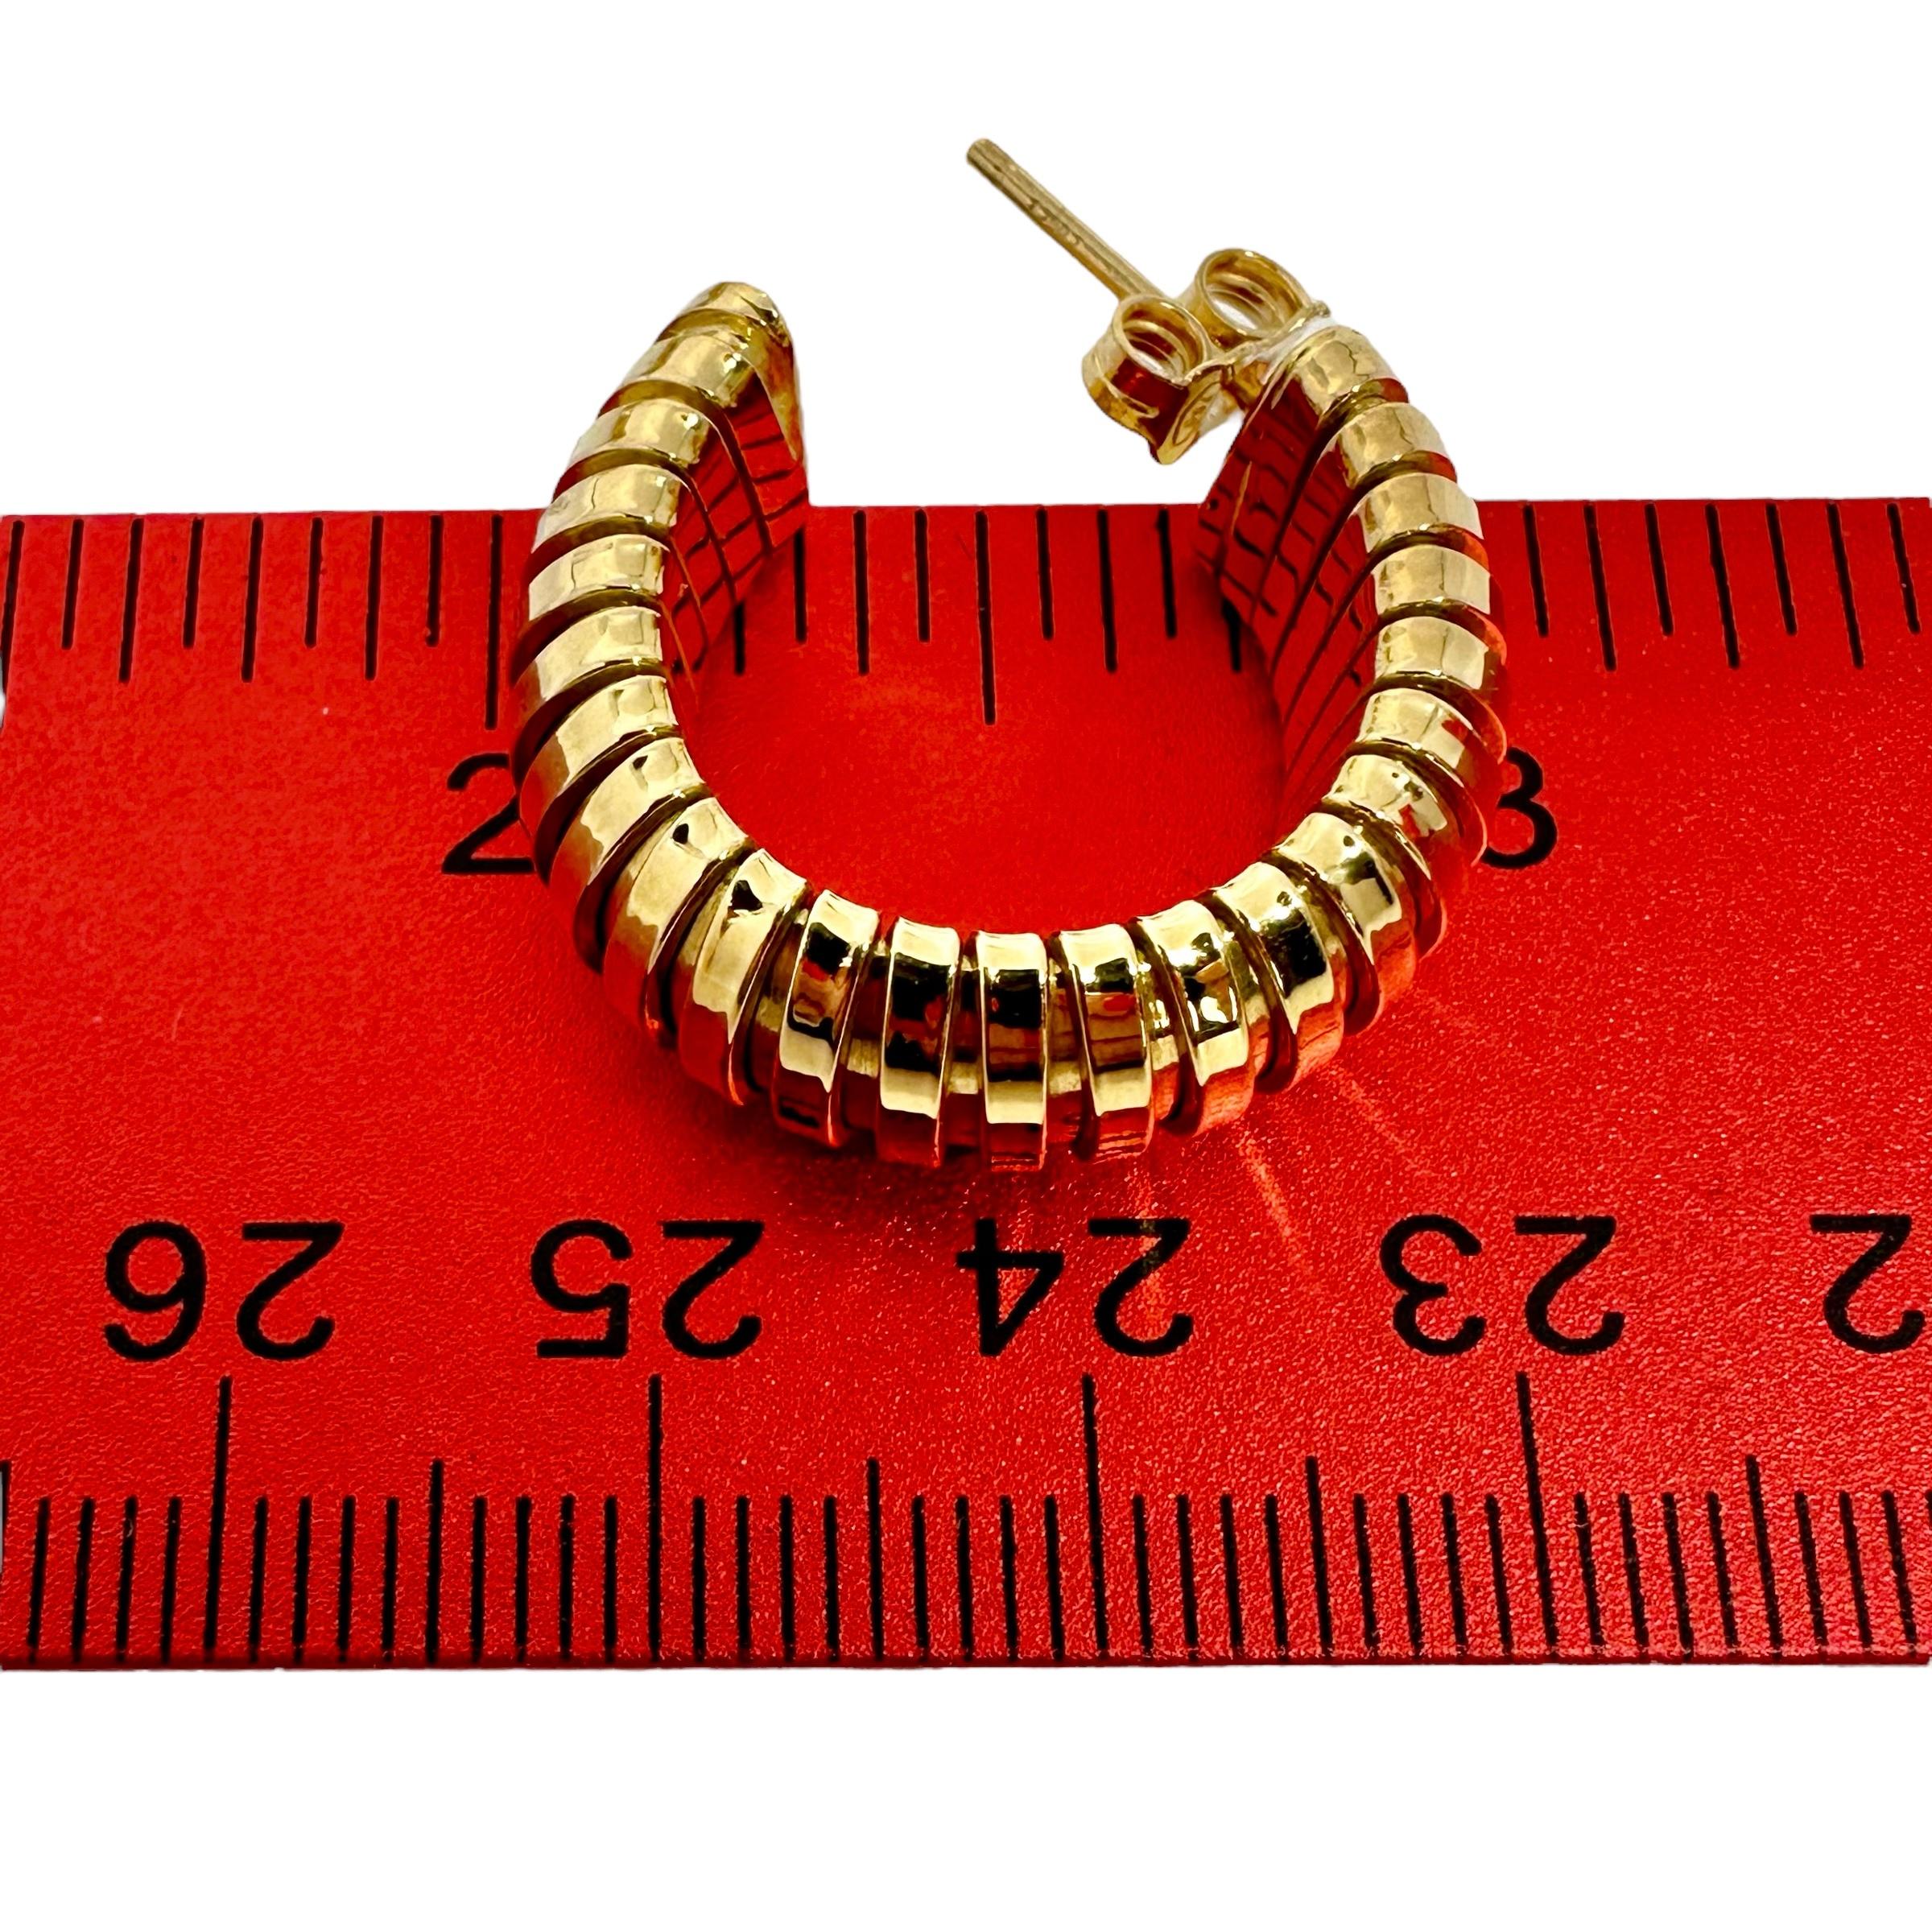 Pristine Vintage Italian Tubogas 18k Gold Hoop Earrings by Herco For Sale 2